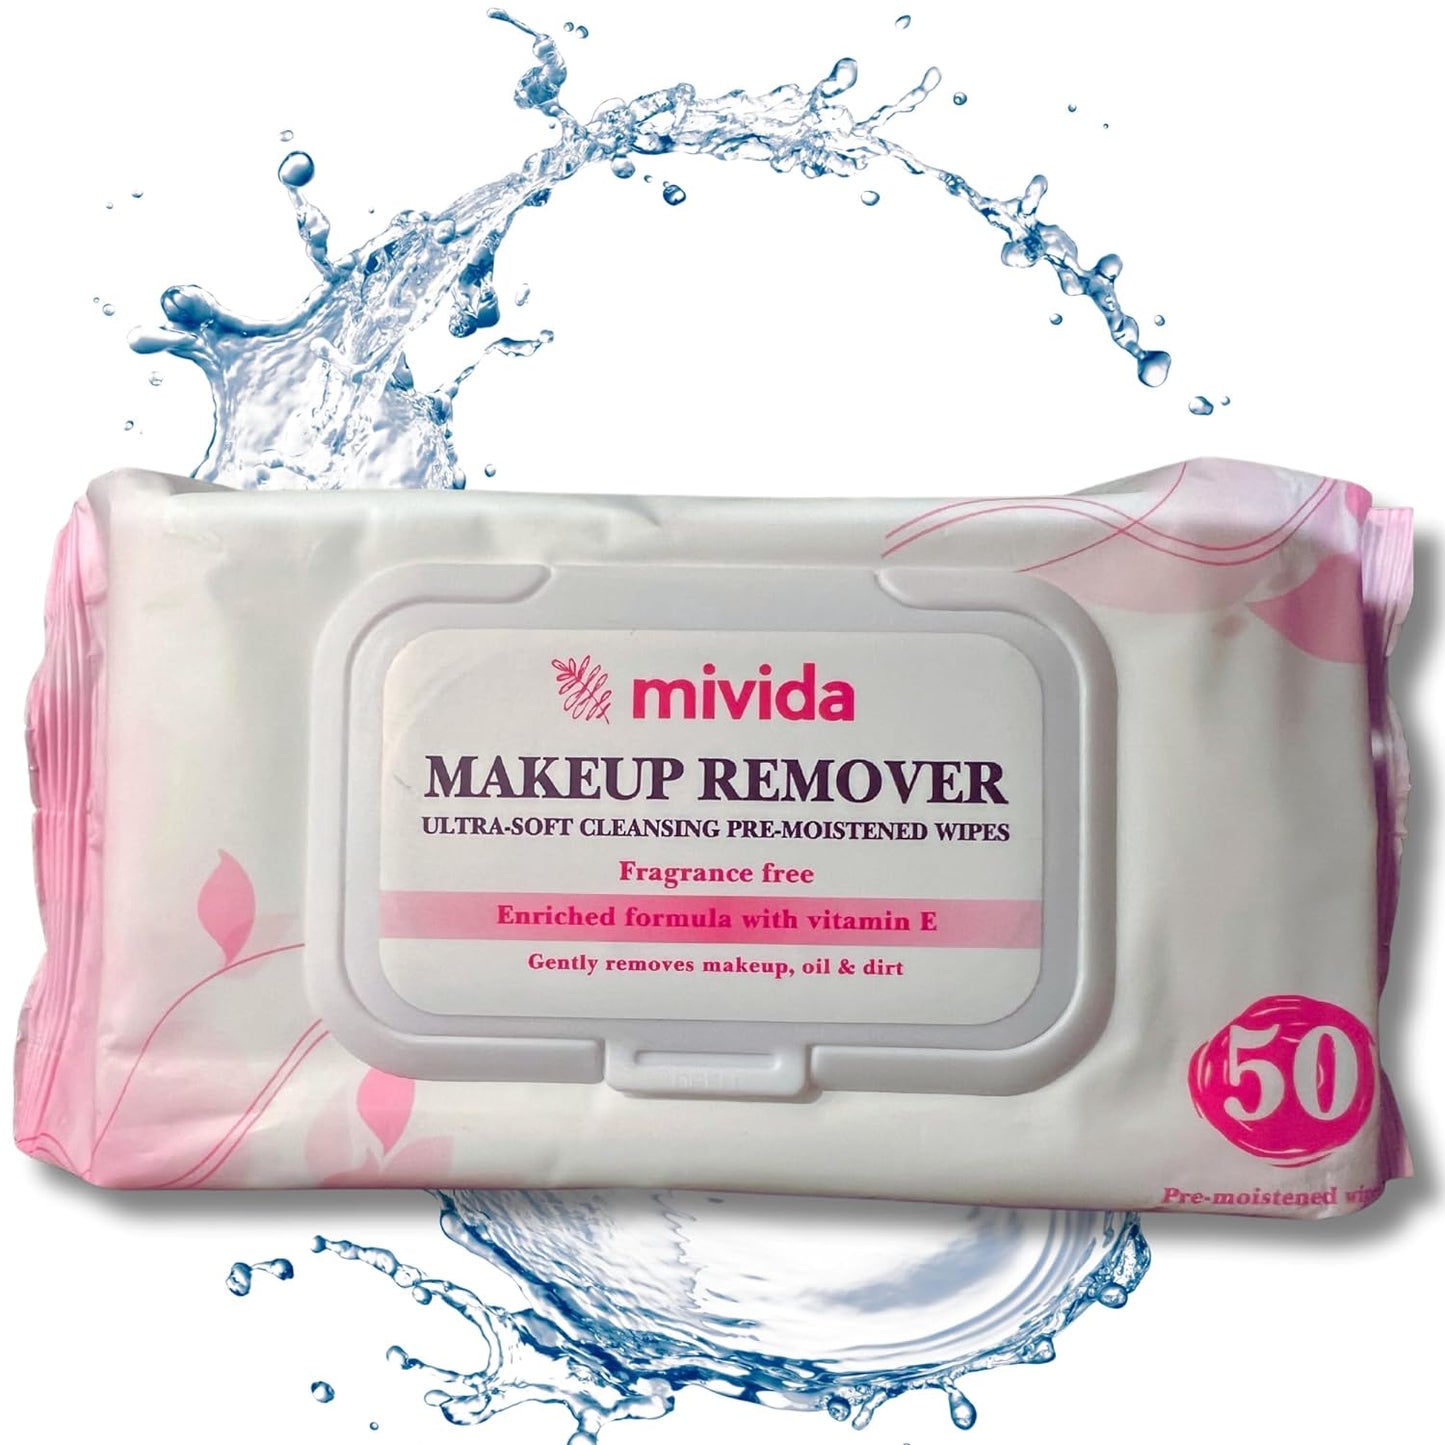 mivida-Makeup-Remover-Wipes-|-517